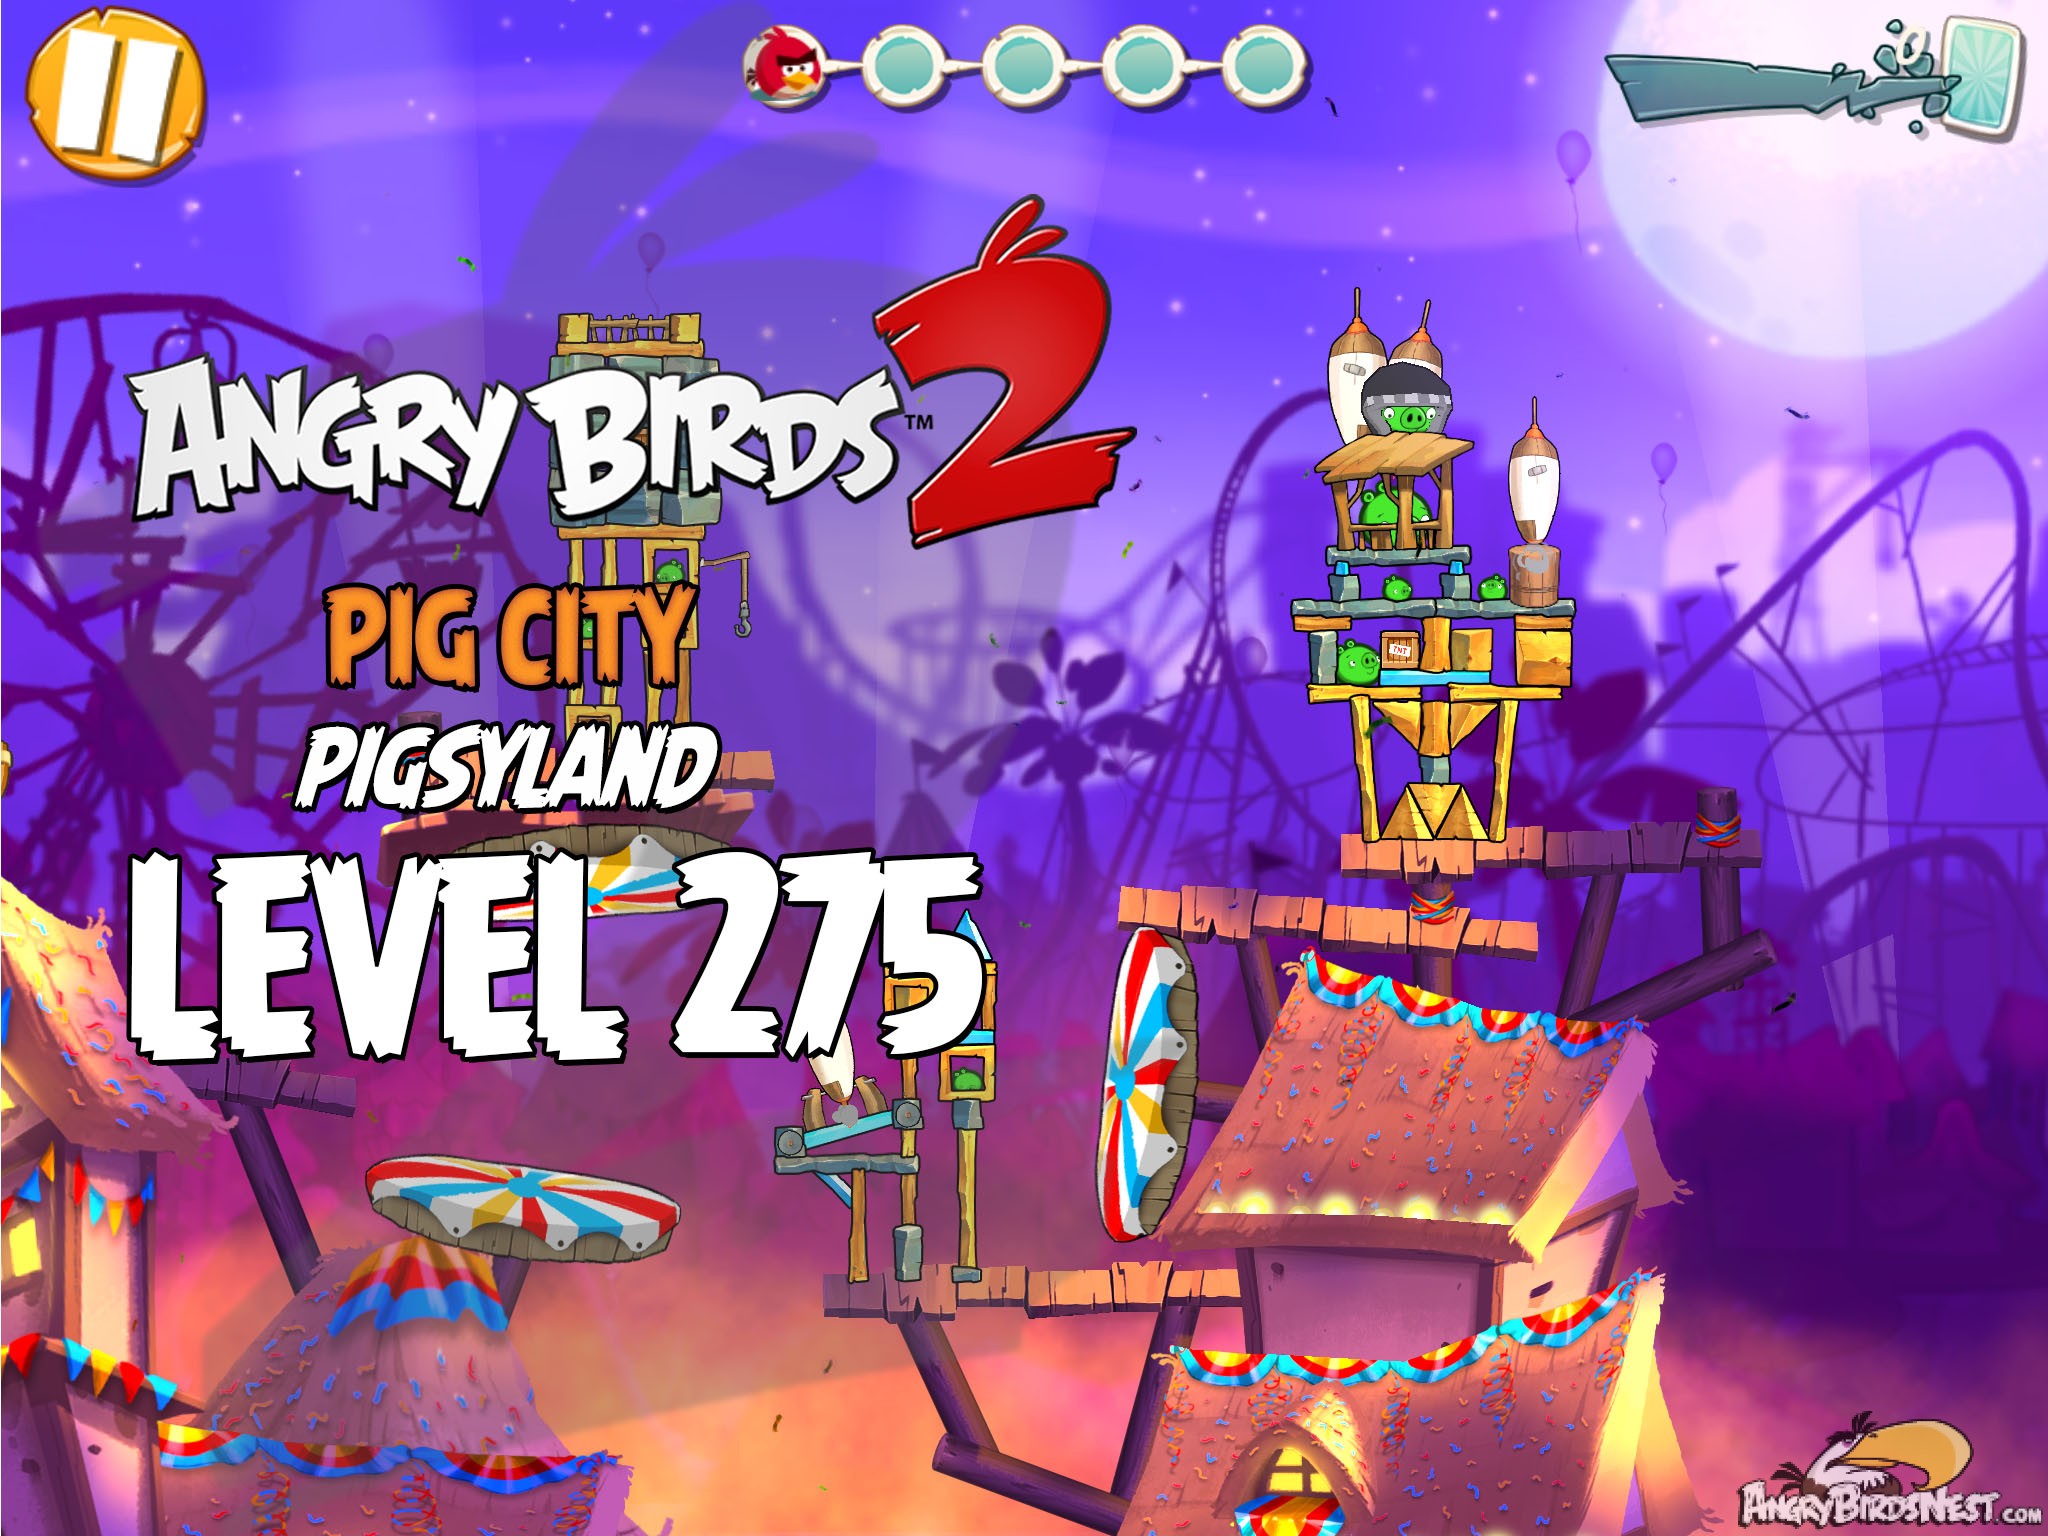 Angry Birds 2 Pig City Pigsyland Level 275